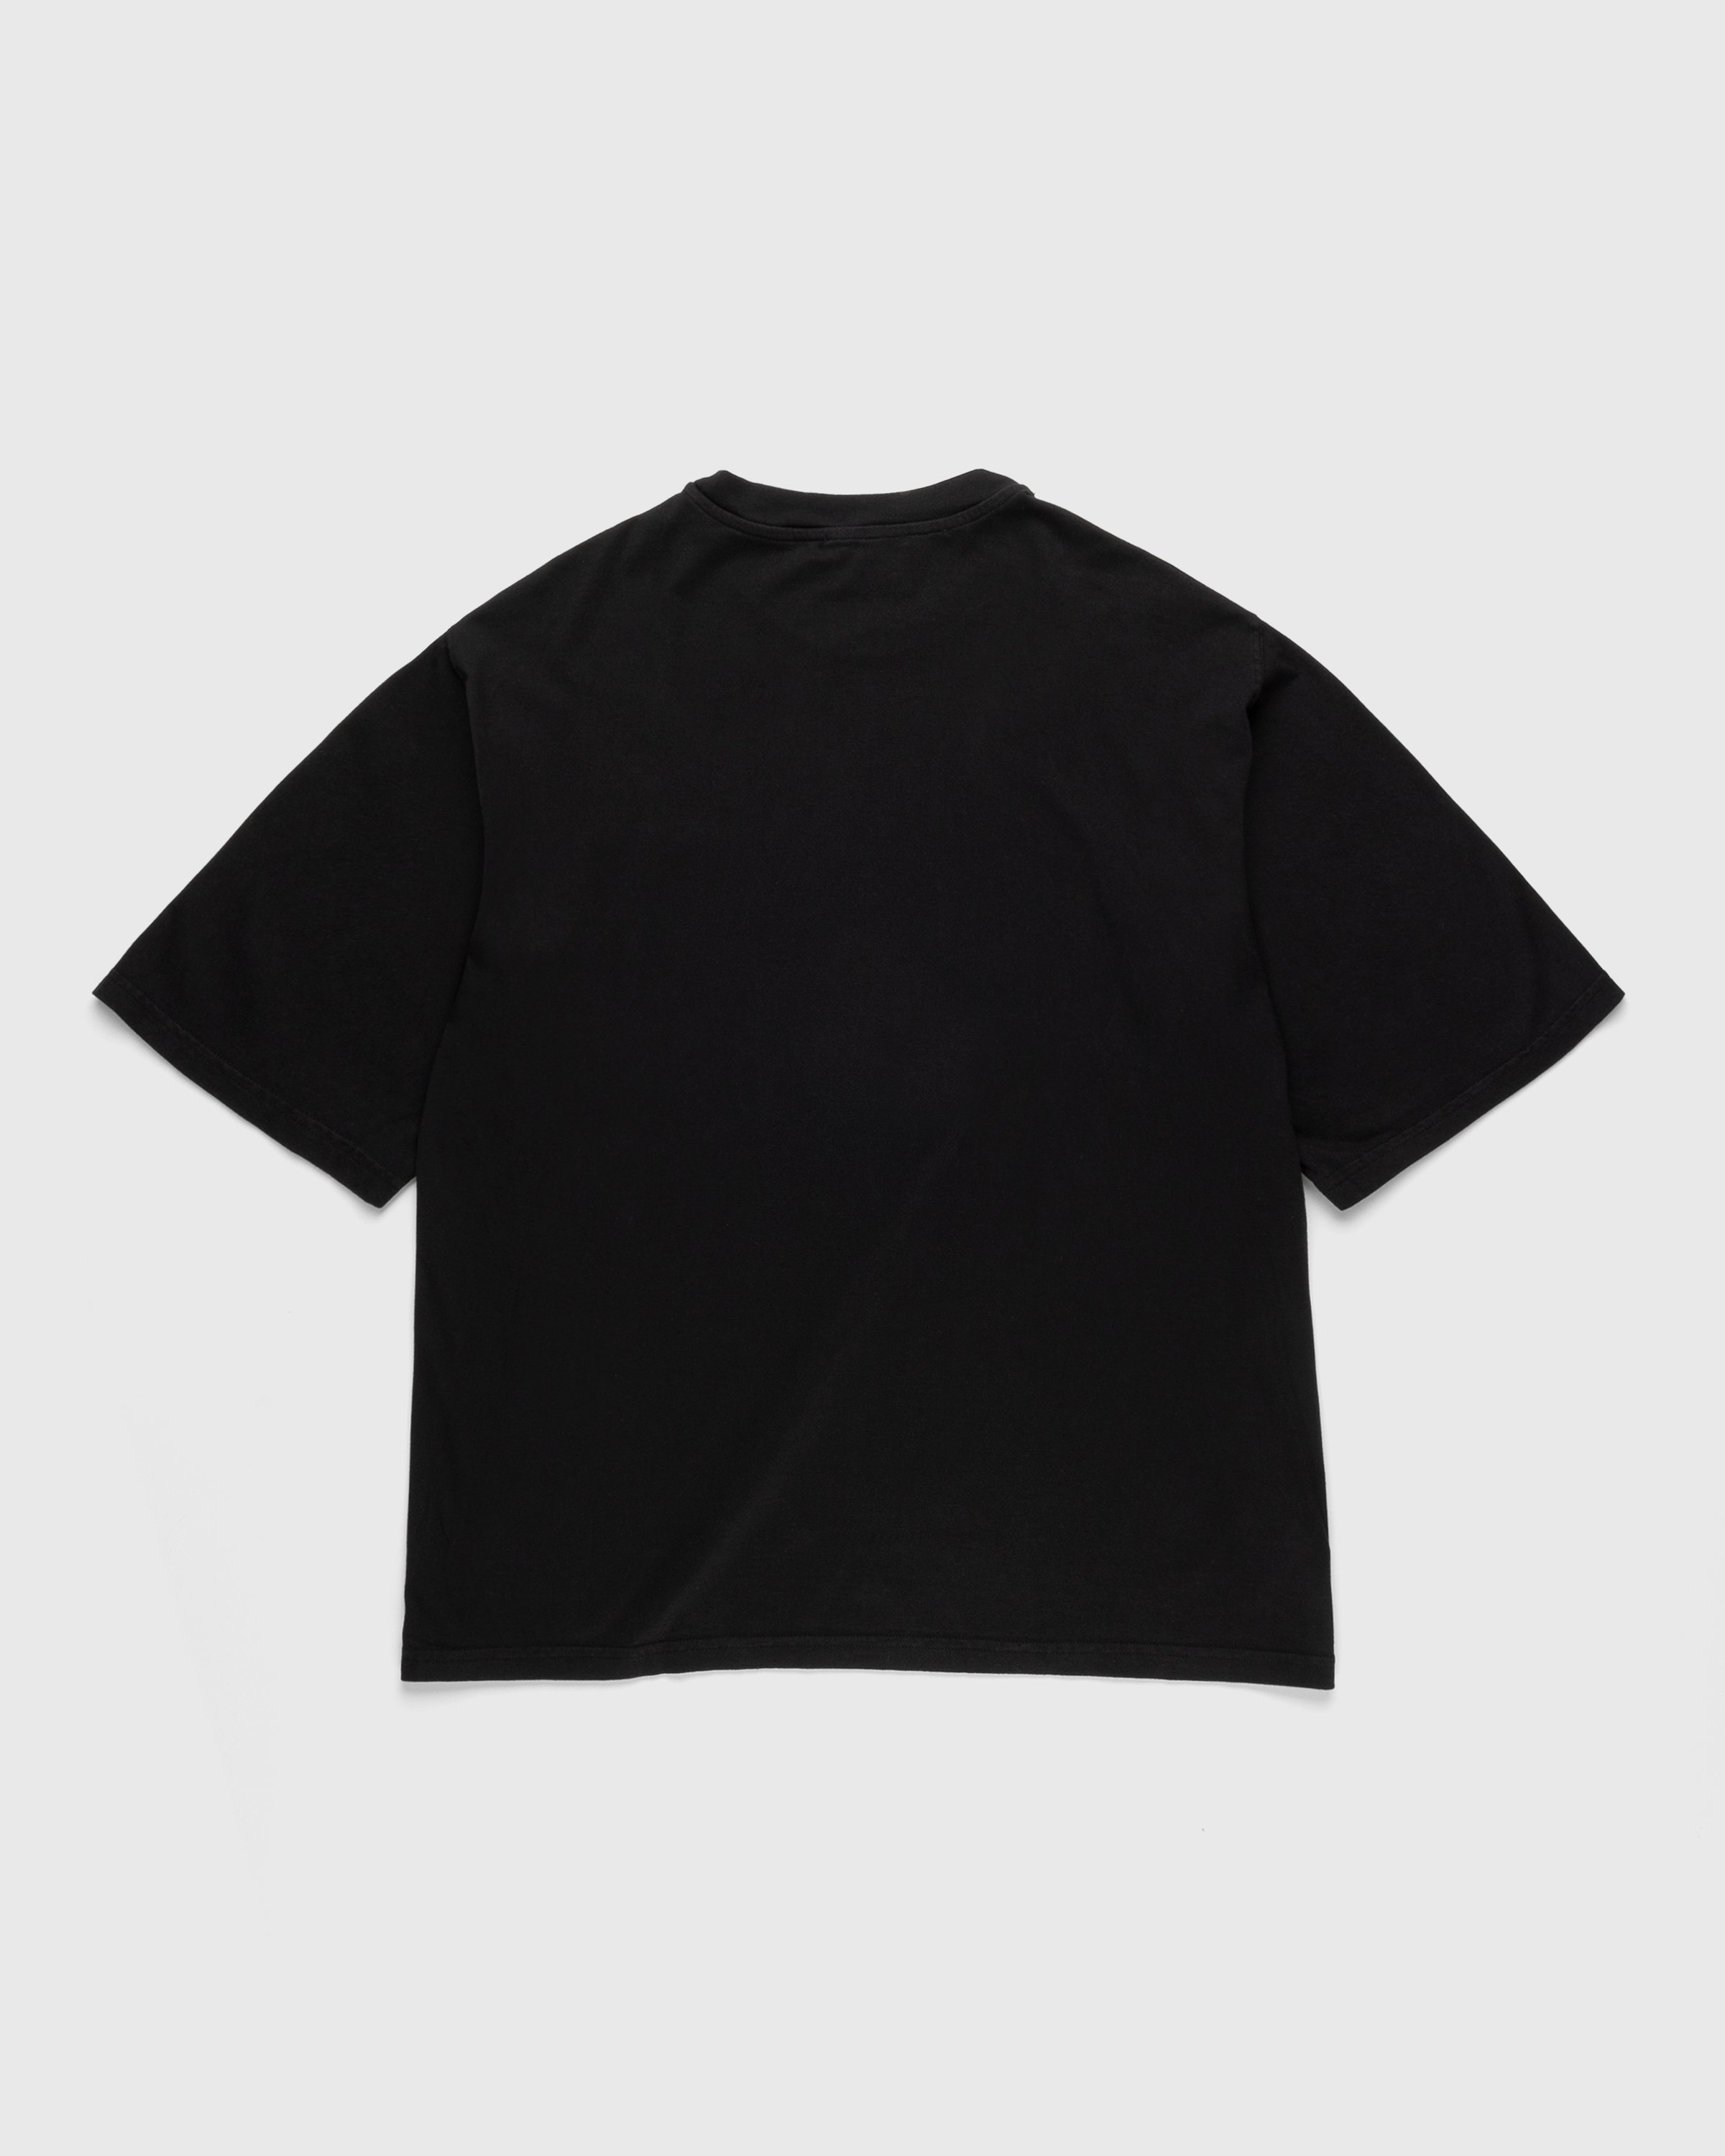 Lourdes New York - Logo Tee Black - Clothing - Black - Image 2